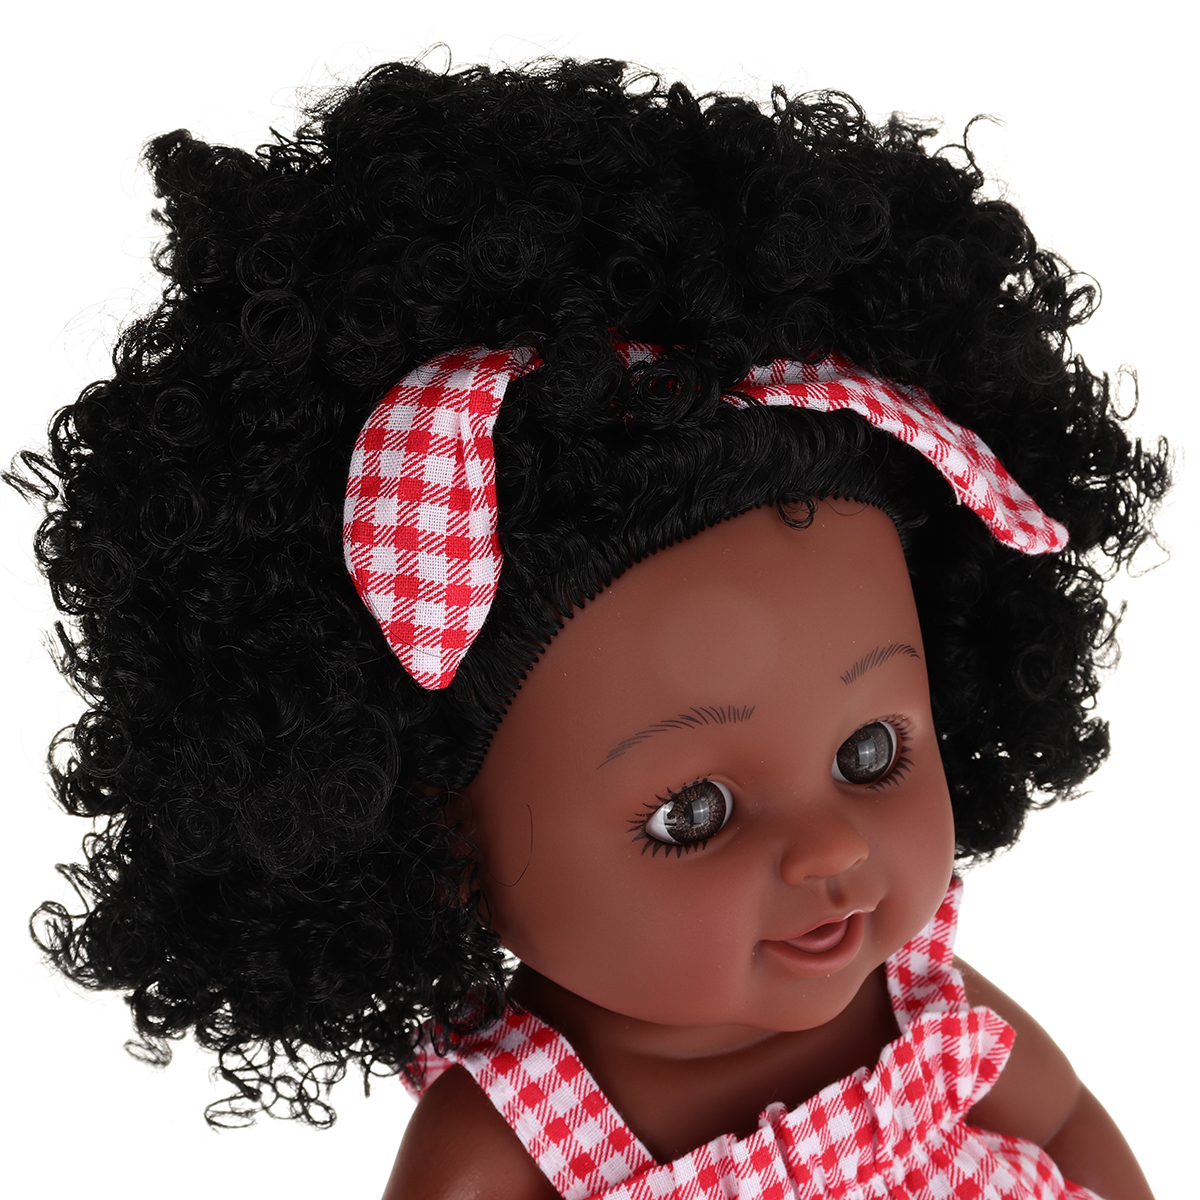 12Inch-Soft-Silicone-Vinyl-PVC-Black-Baby-Fashion-Doll-Rotate-360deg-African-Girl-Perfect-Reborn-Dol-1734365-6